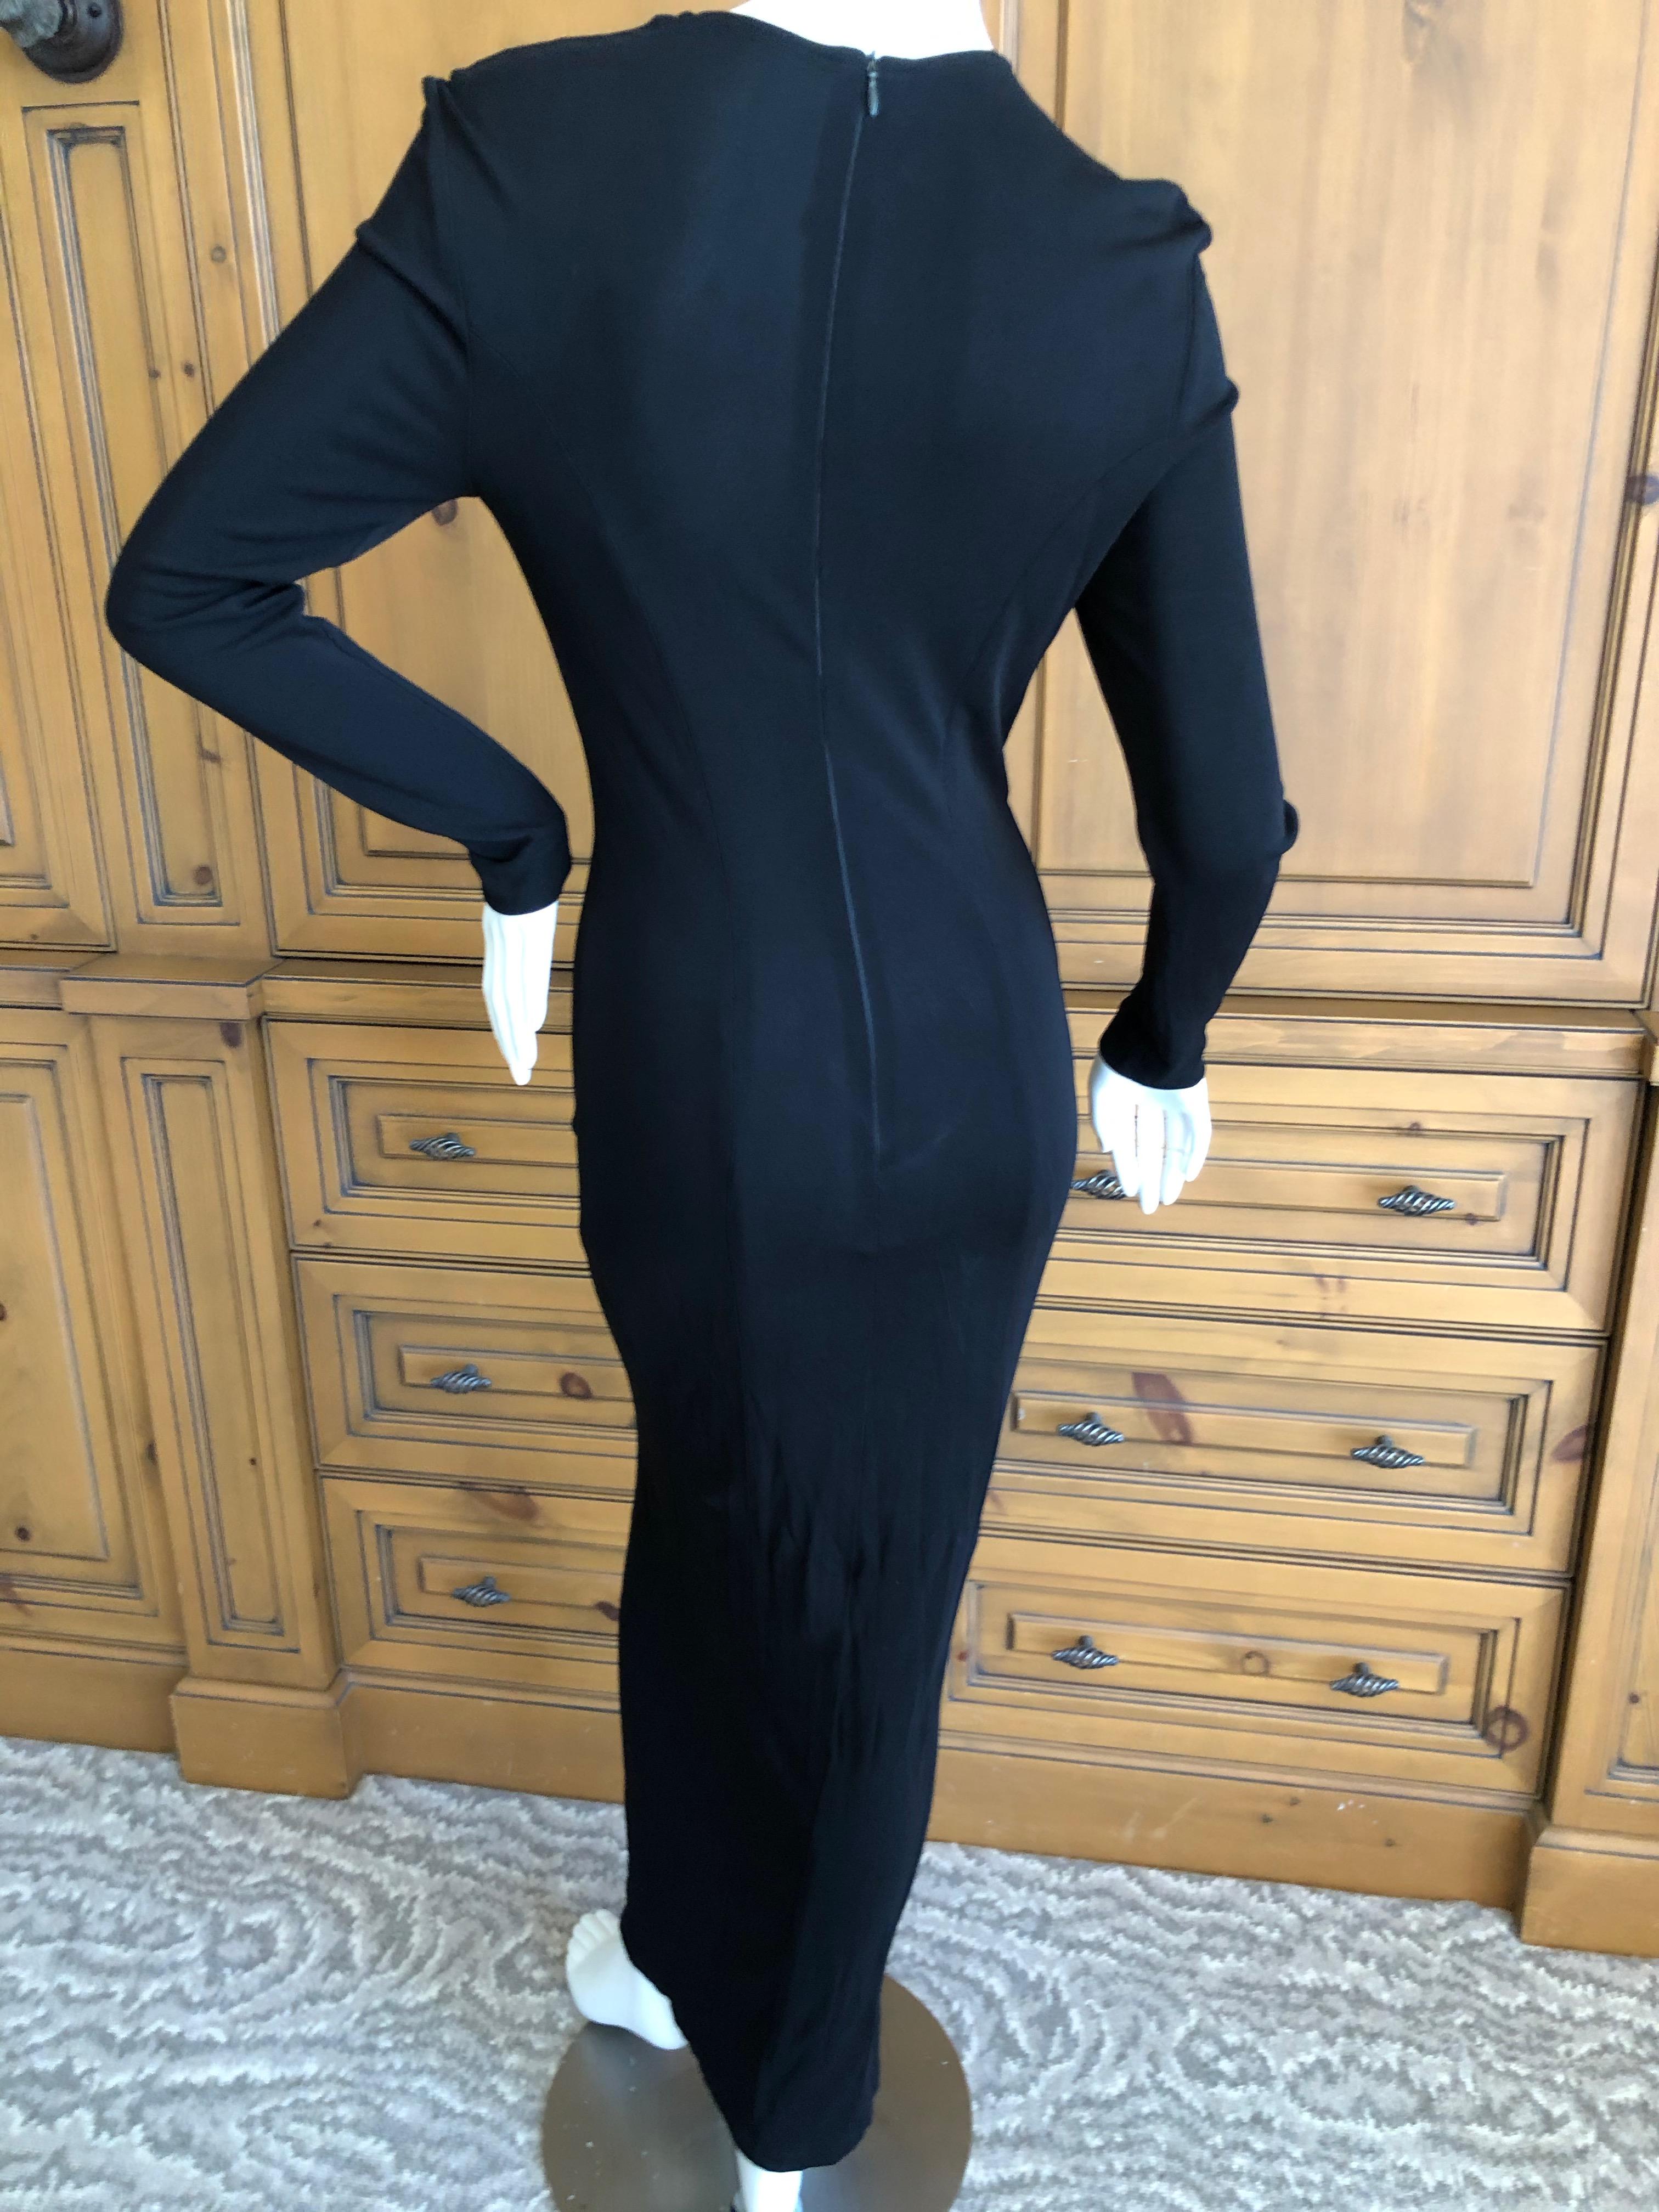 Thierry Mugler Vintage 1980's Black Evening Dress w Sheer Crystal Zipper Details For Sale 2